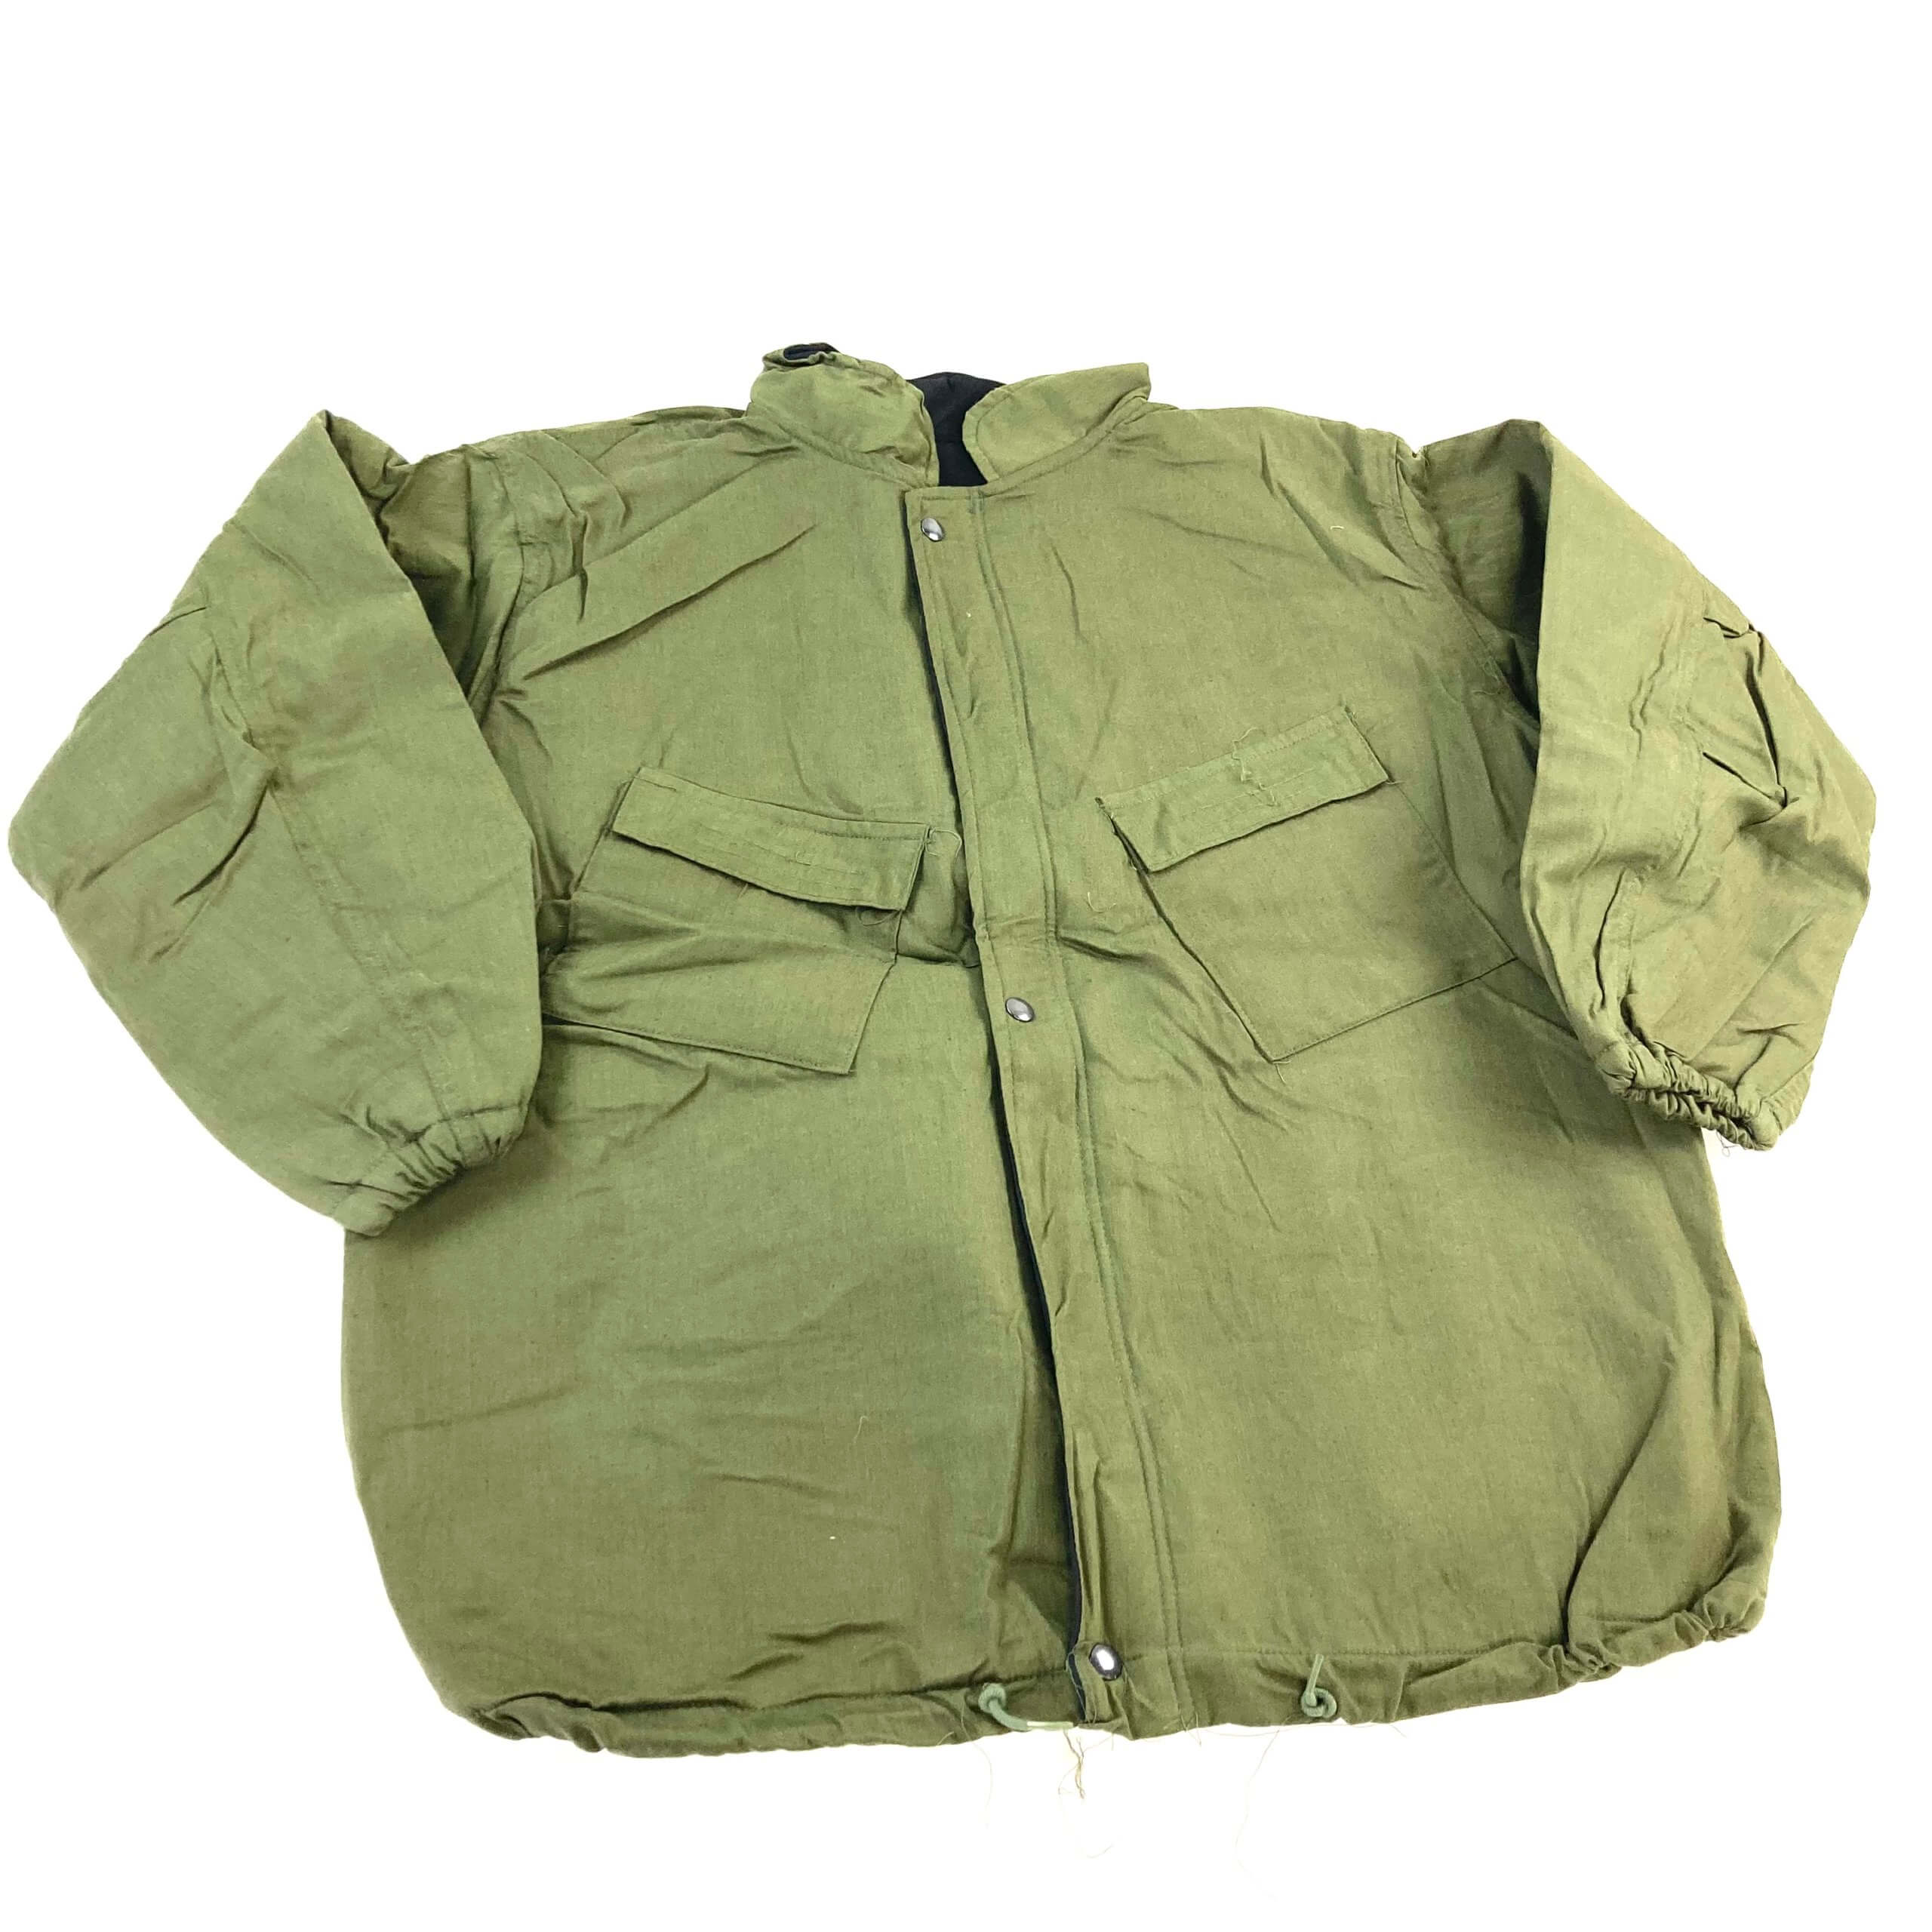 USGI Vintage Chemical Protective Suit, Olive Drab - Venture Surplus